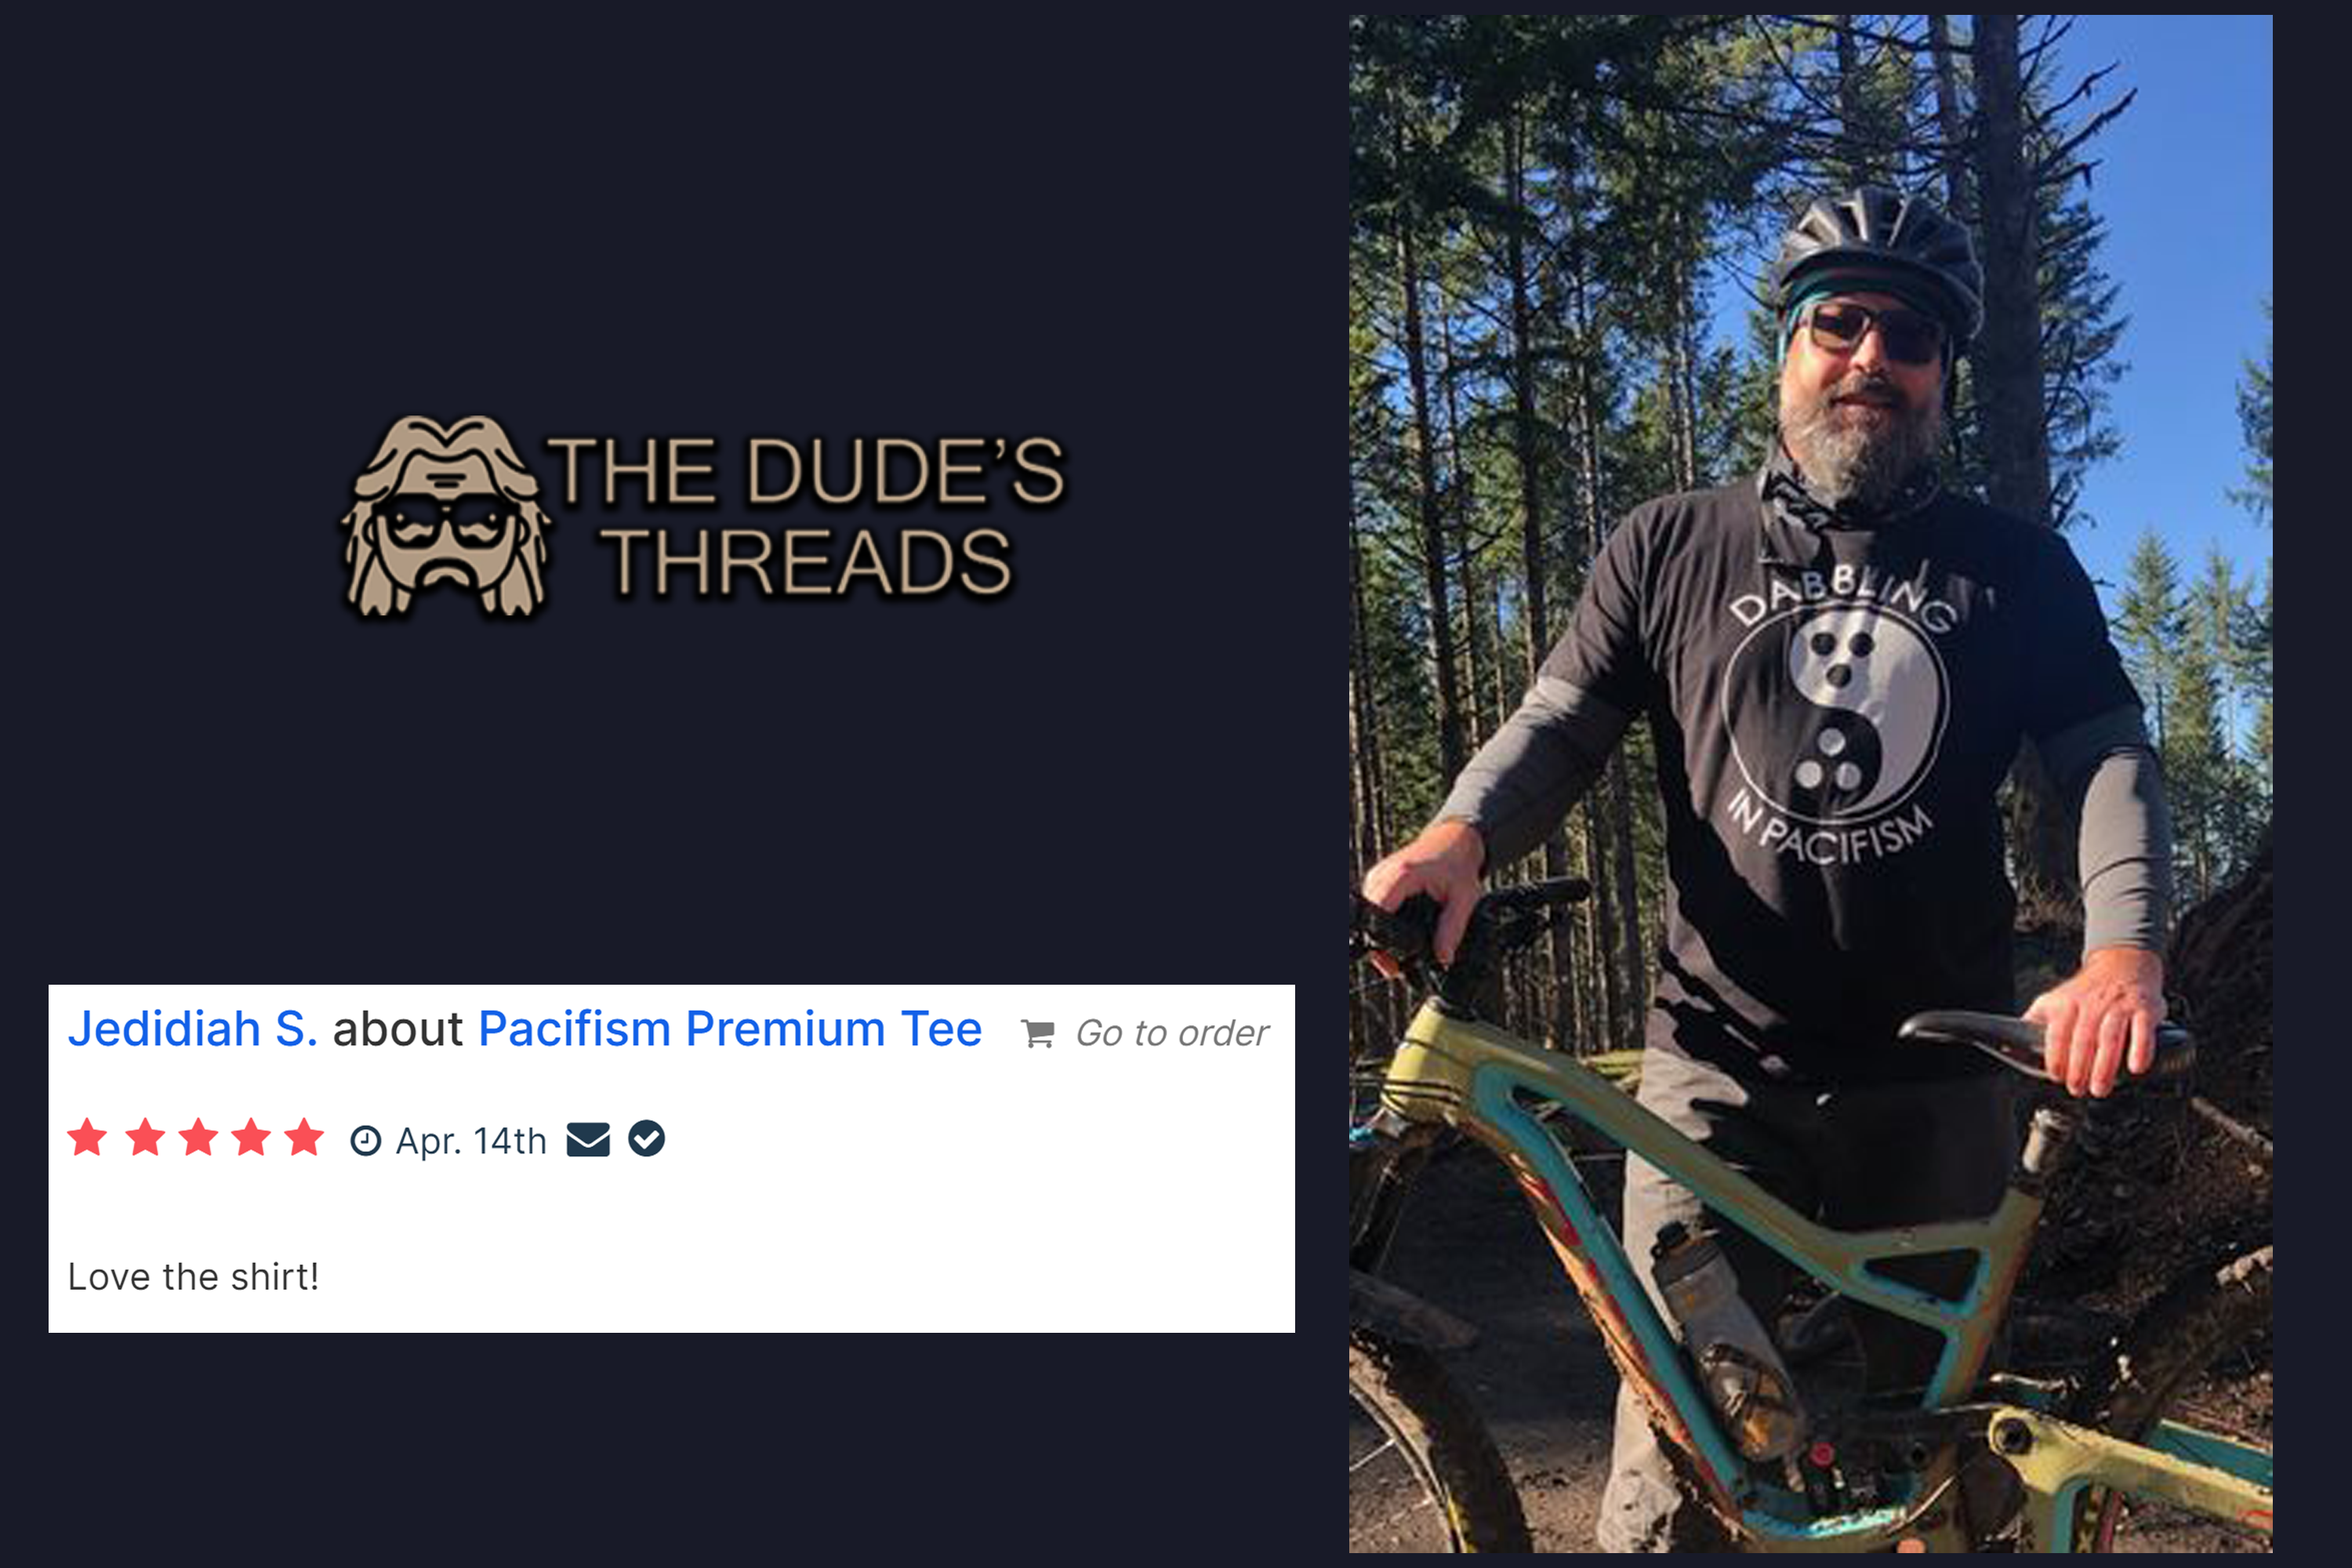 Mountain Bike Premium Triblend T-Shirt